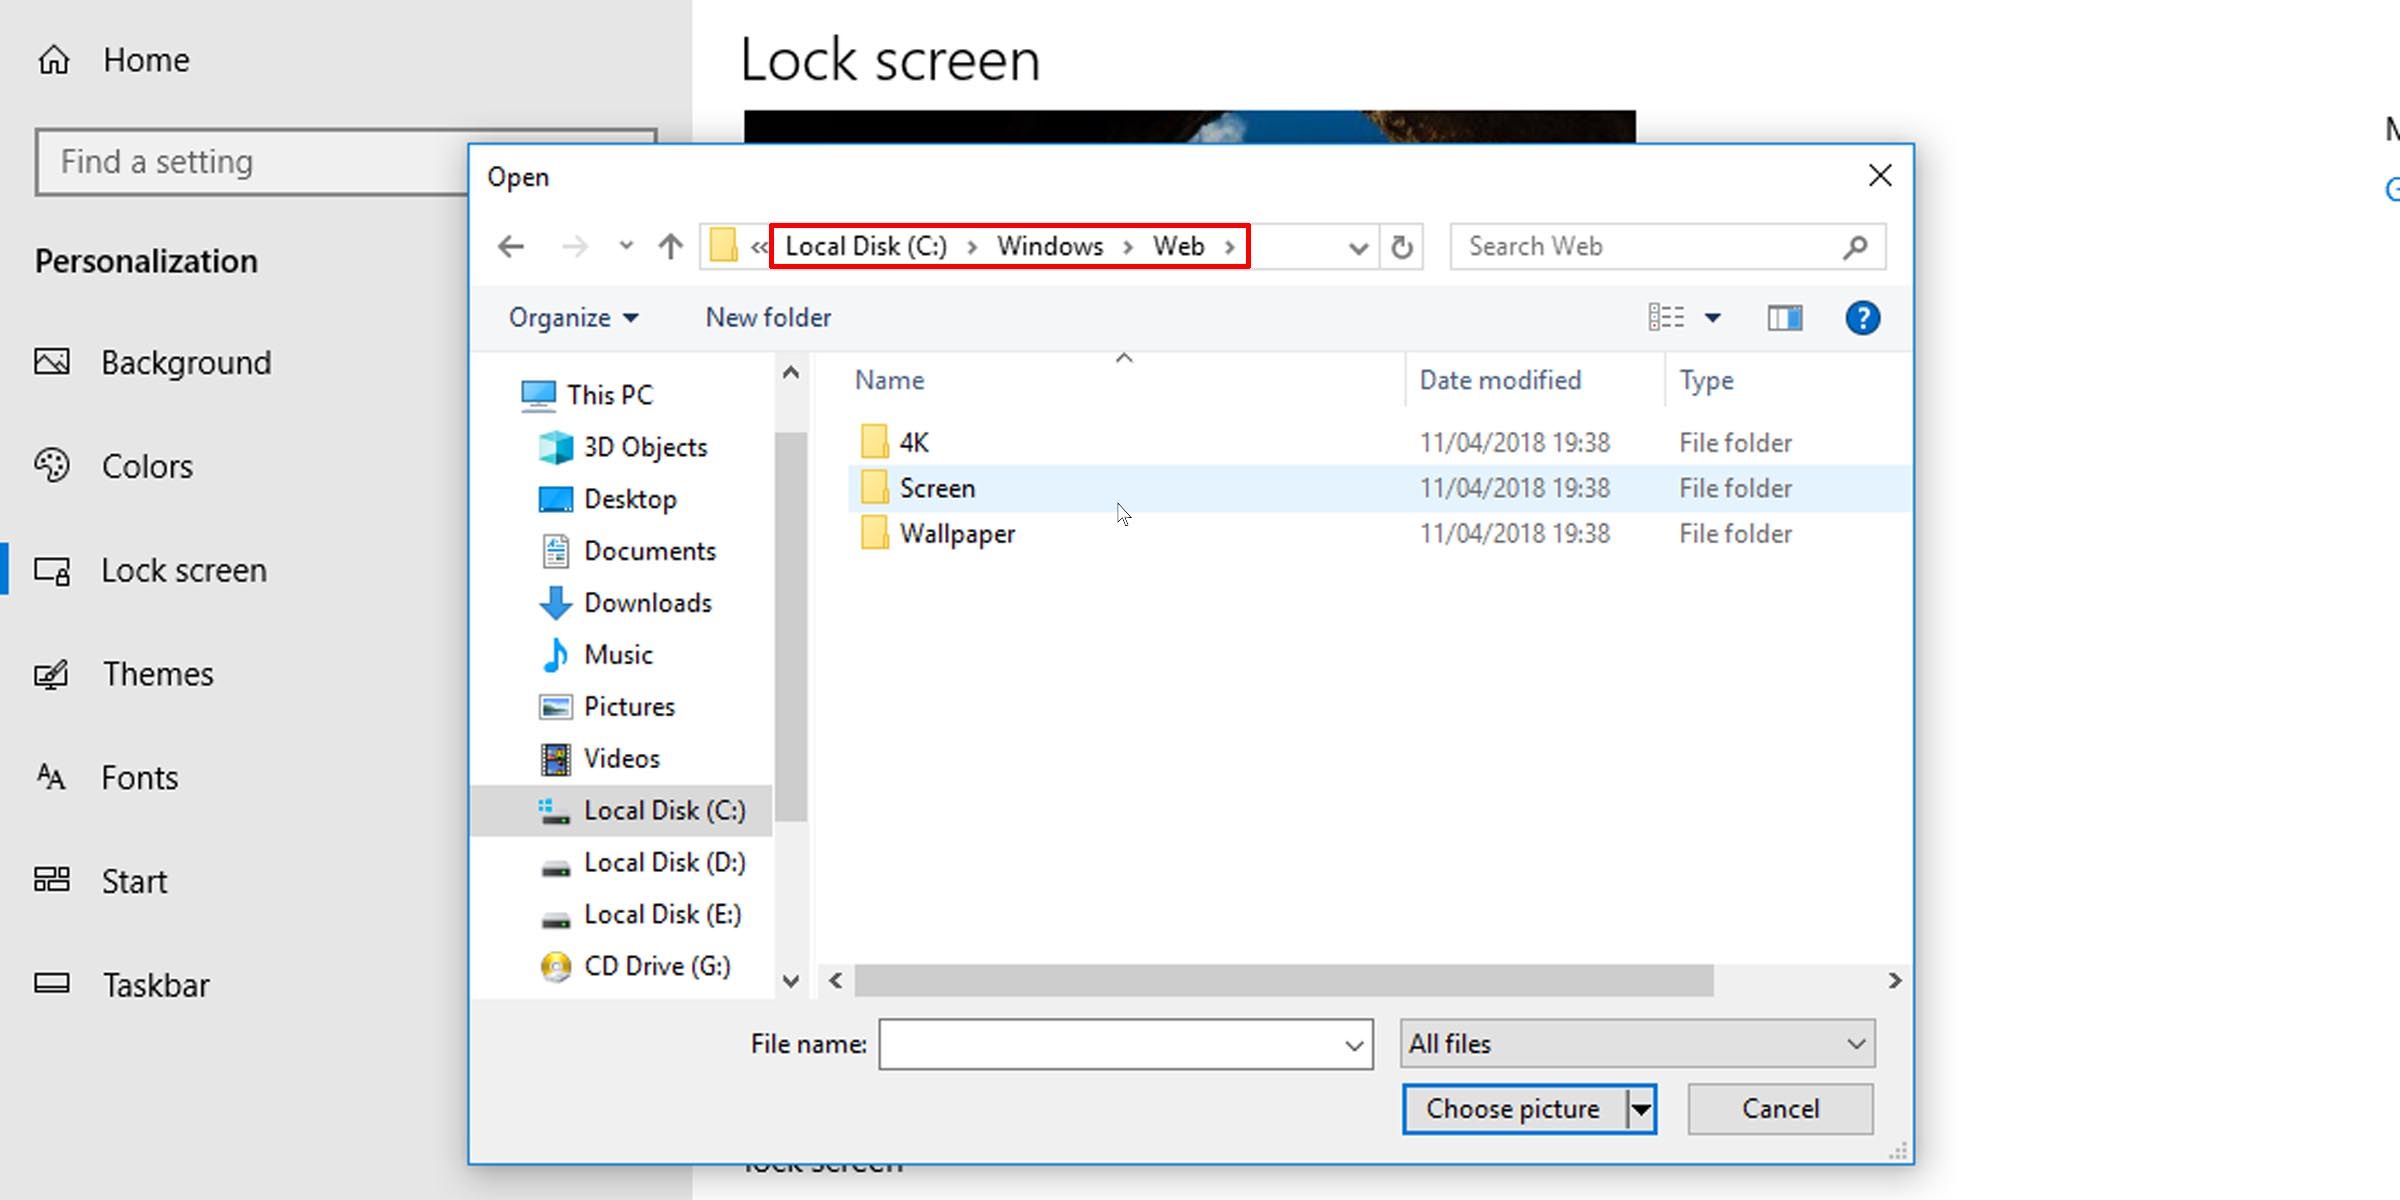 Windows 10 default log on screen images